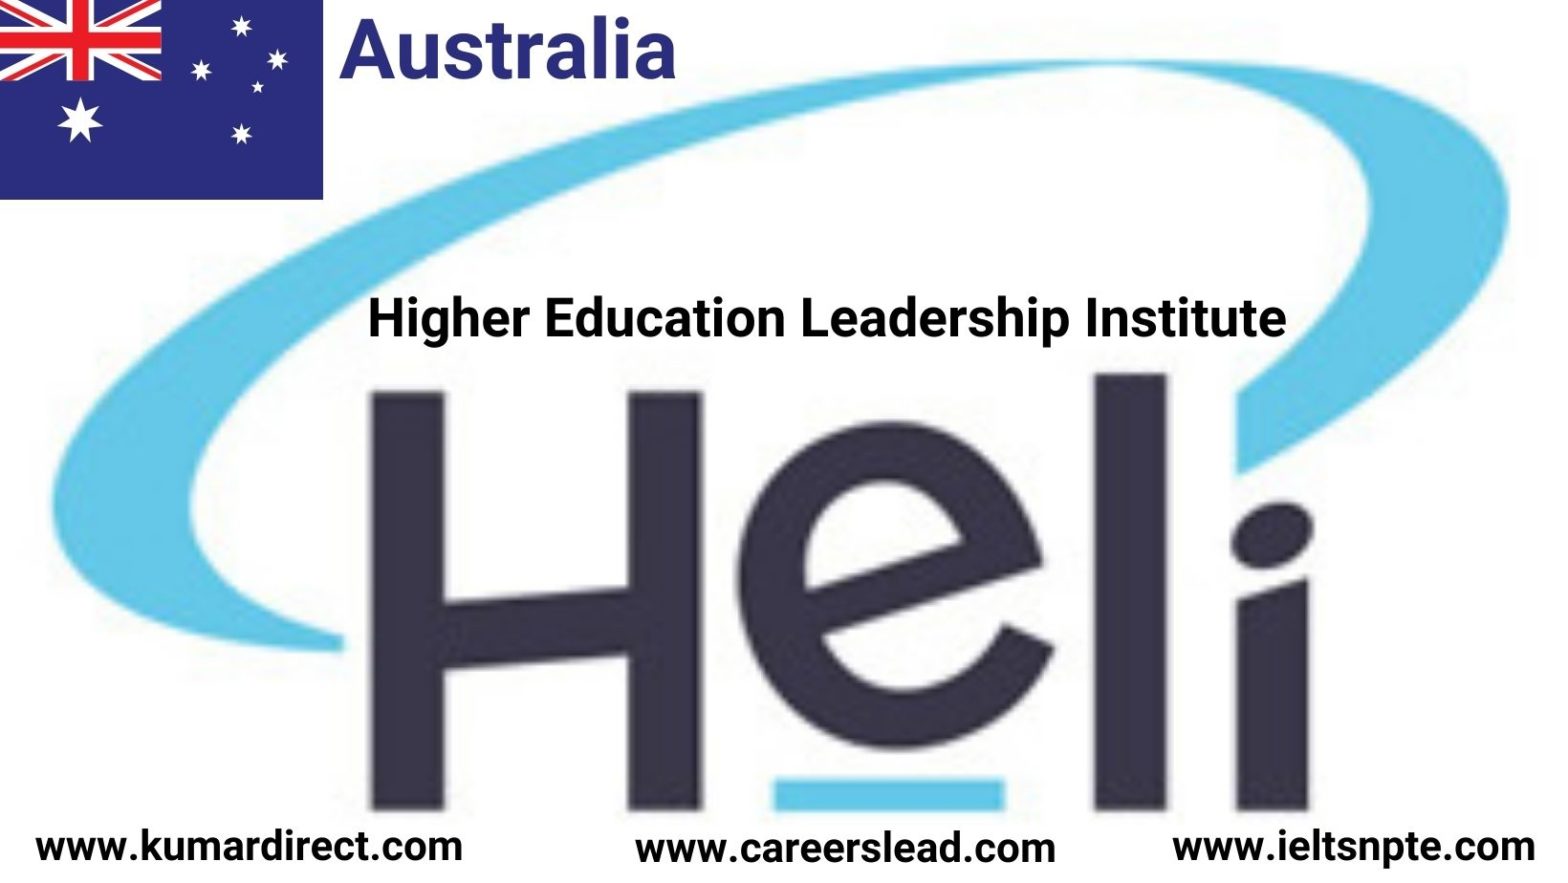 Higher Education Leadership Institute (HELI)